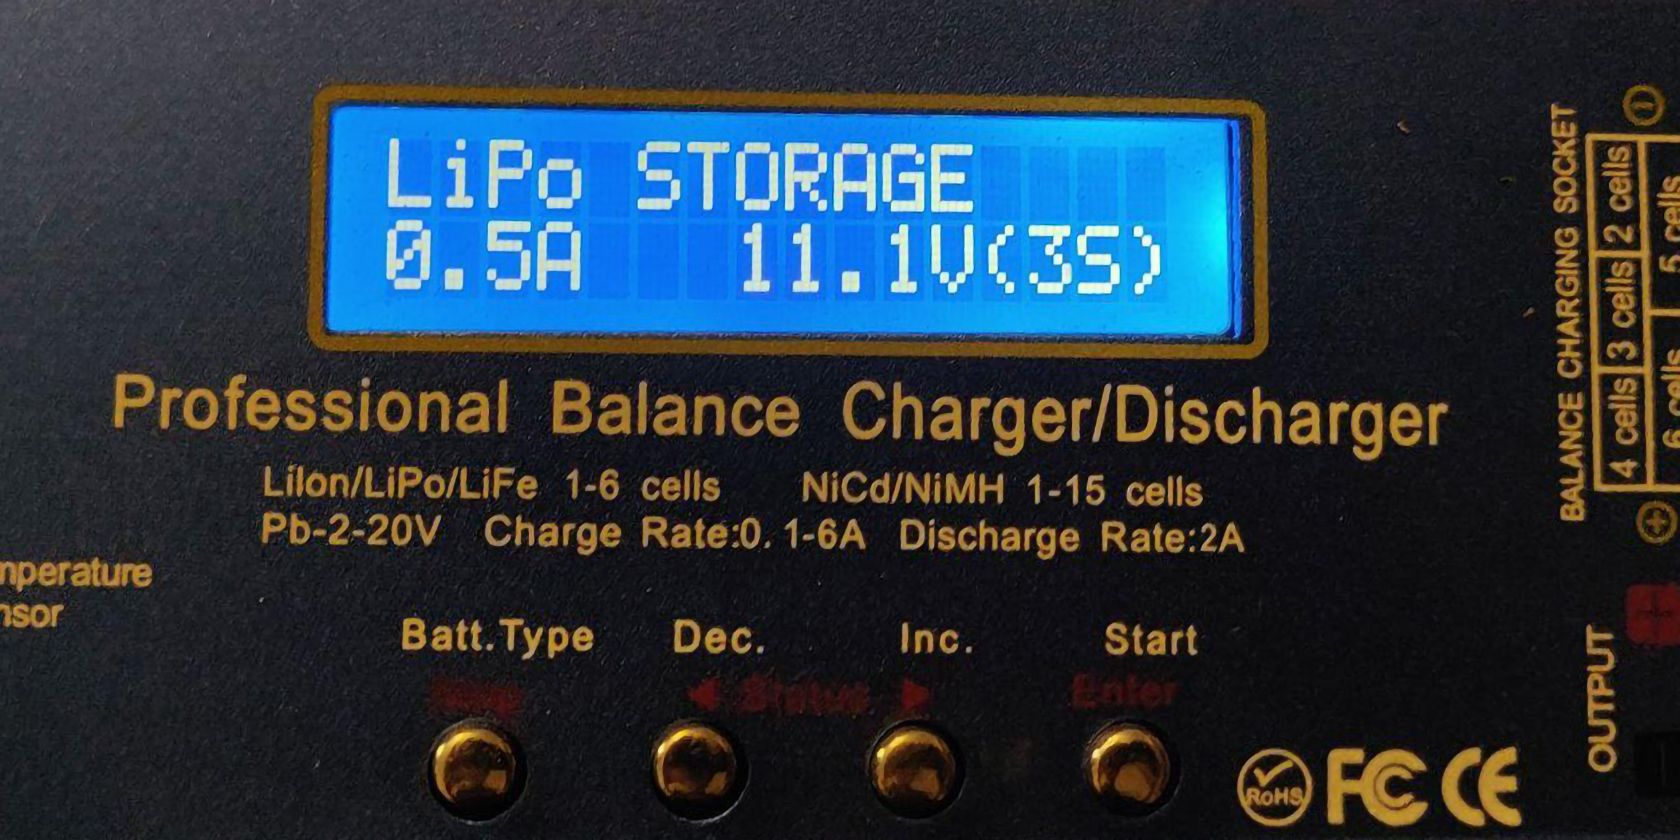 The LiPo storage charge setting